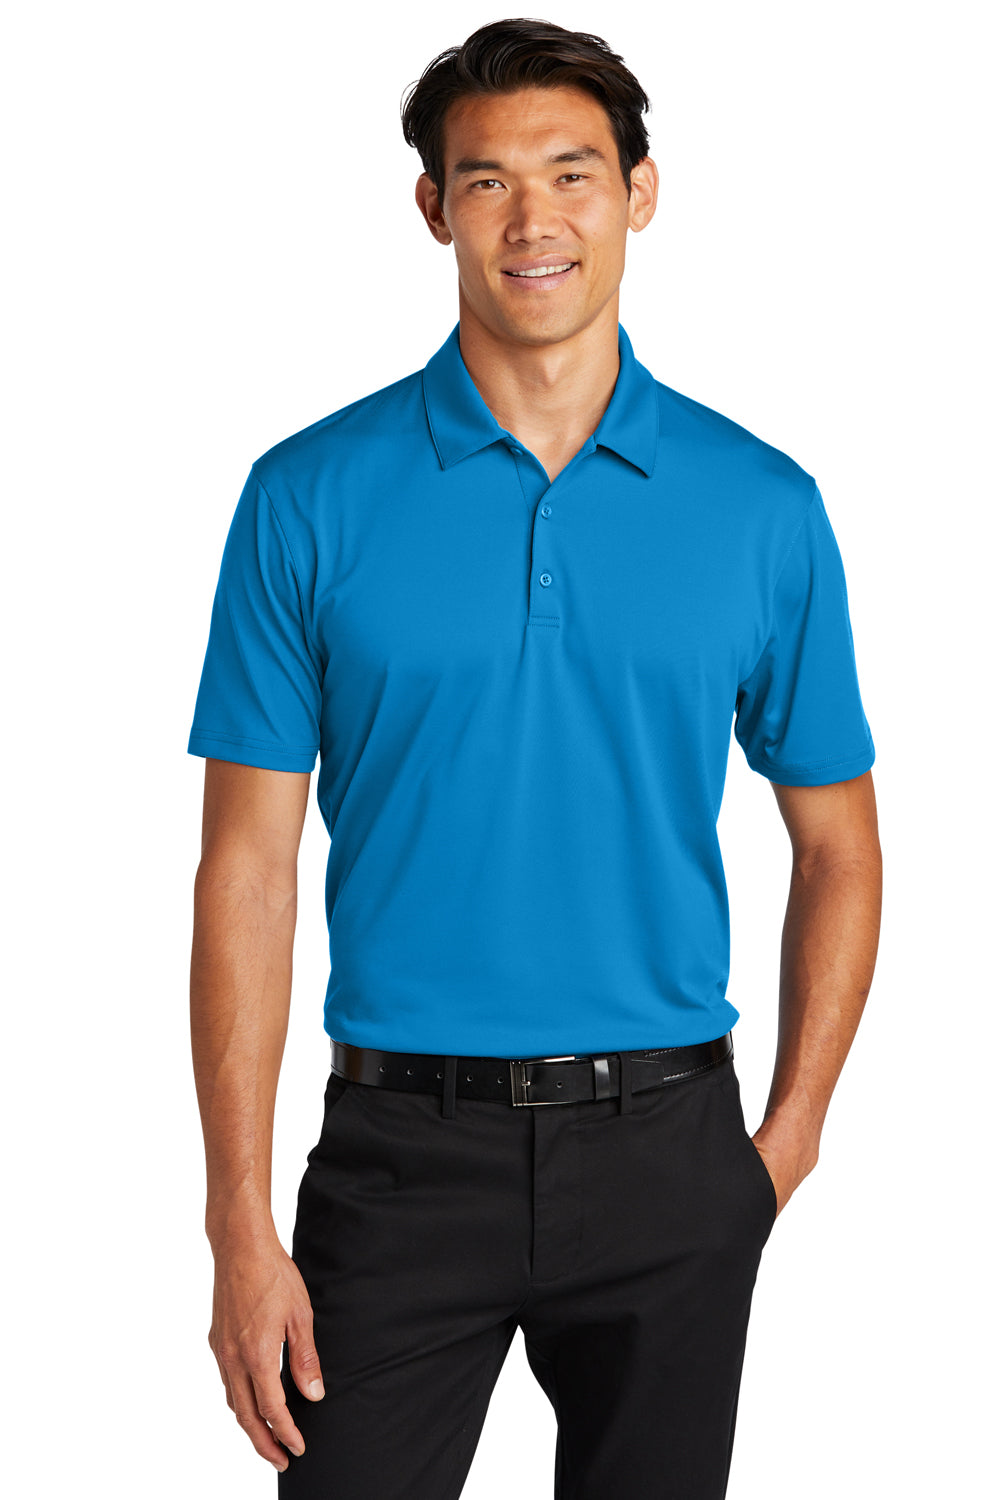 Port Authority K398 Staff Performance Short Sleeve Polo Shirt Brilliant Blue Front